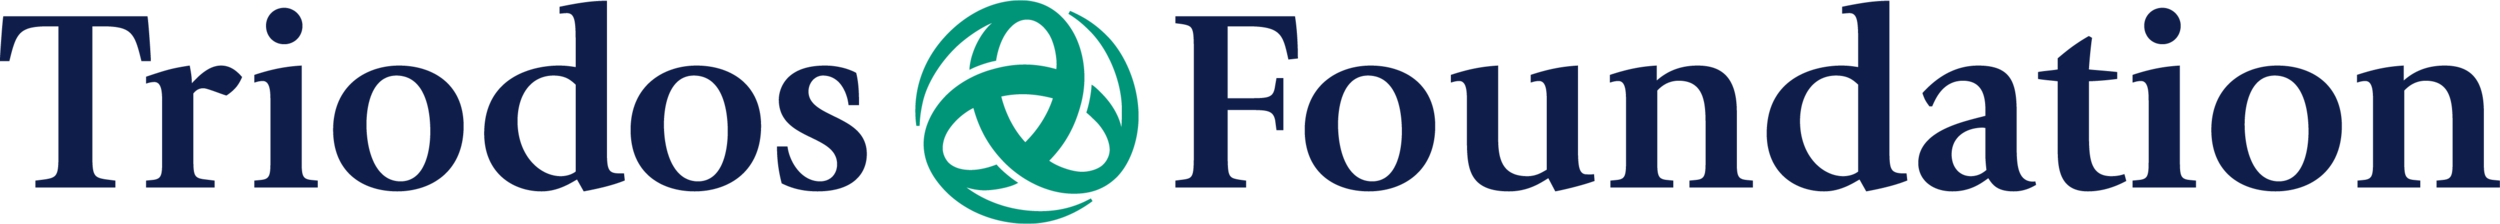 Triodos-Foundation logo_RGB_online.png